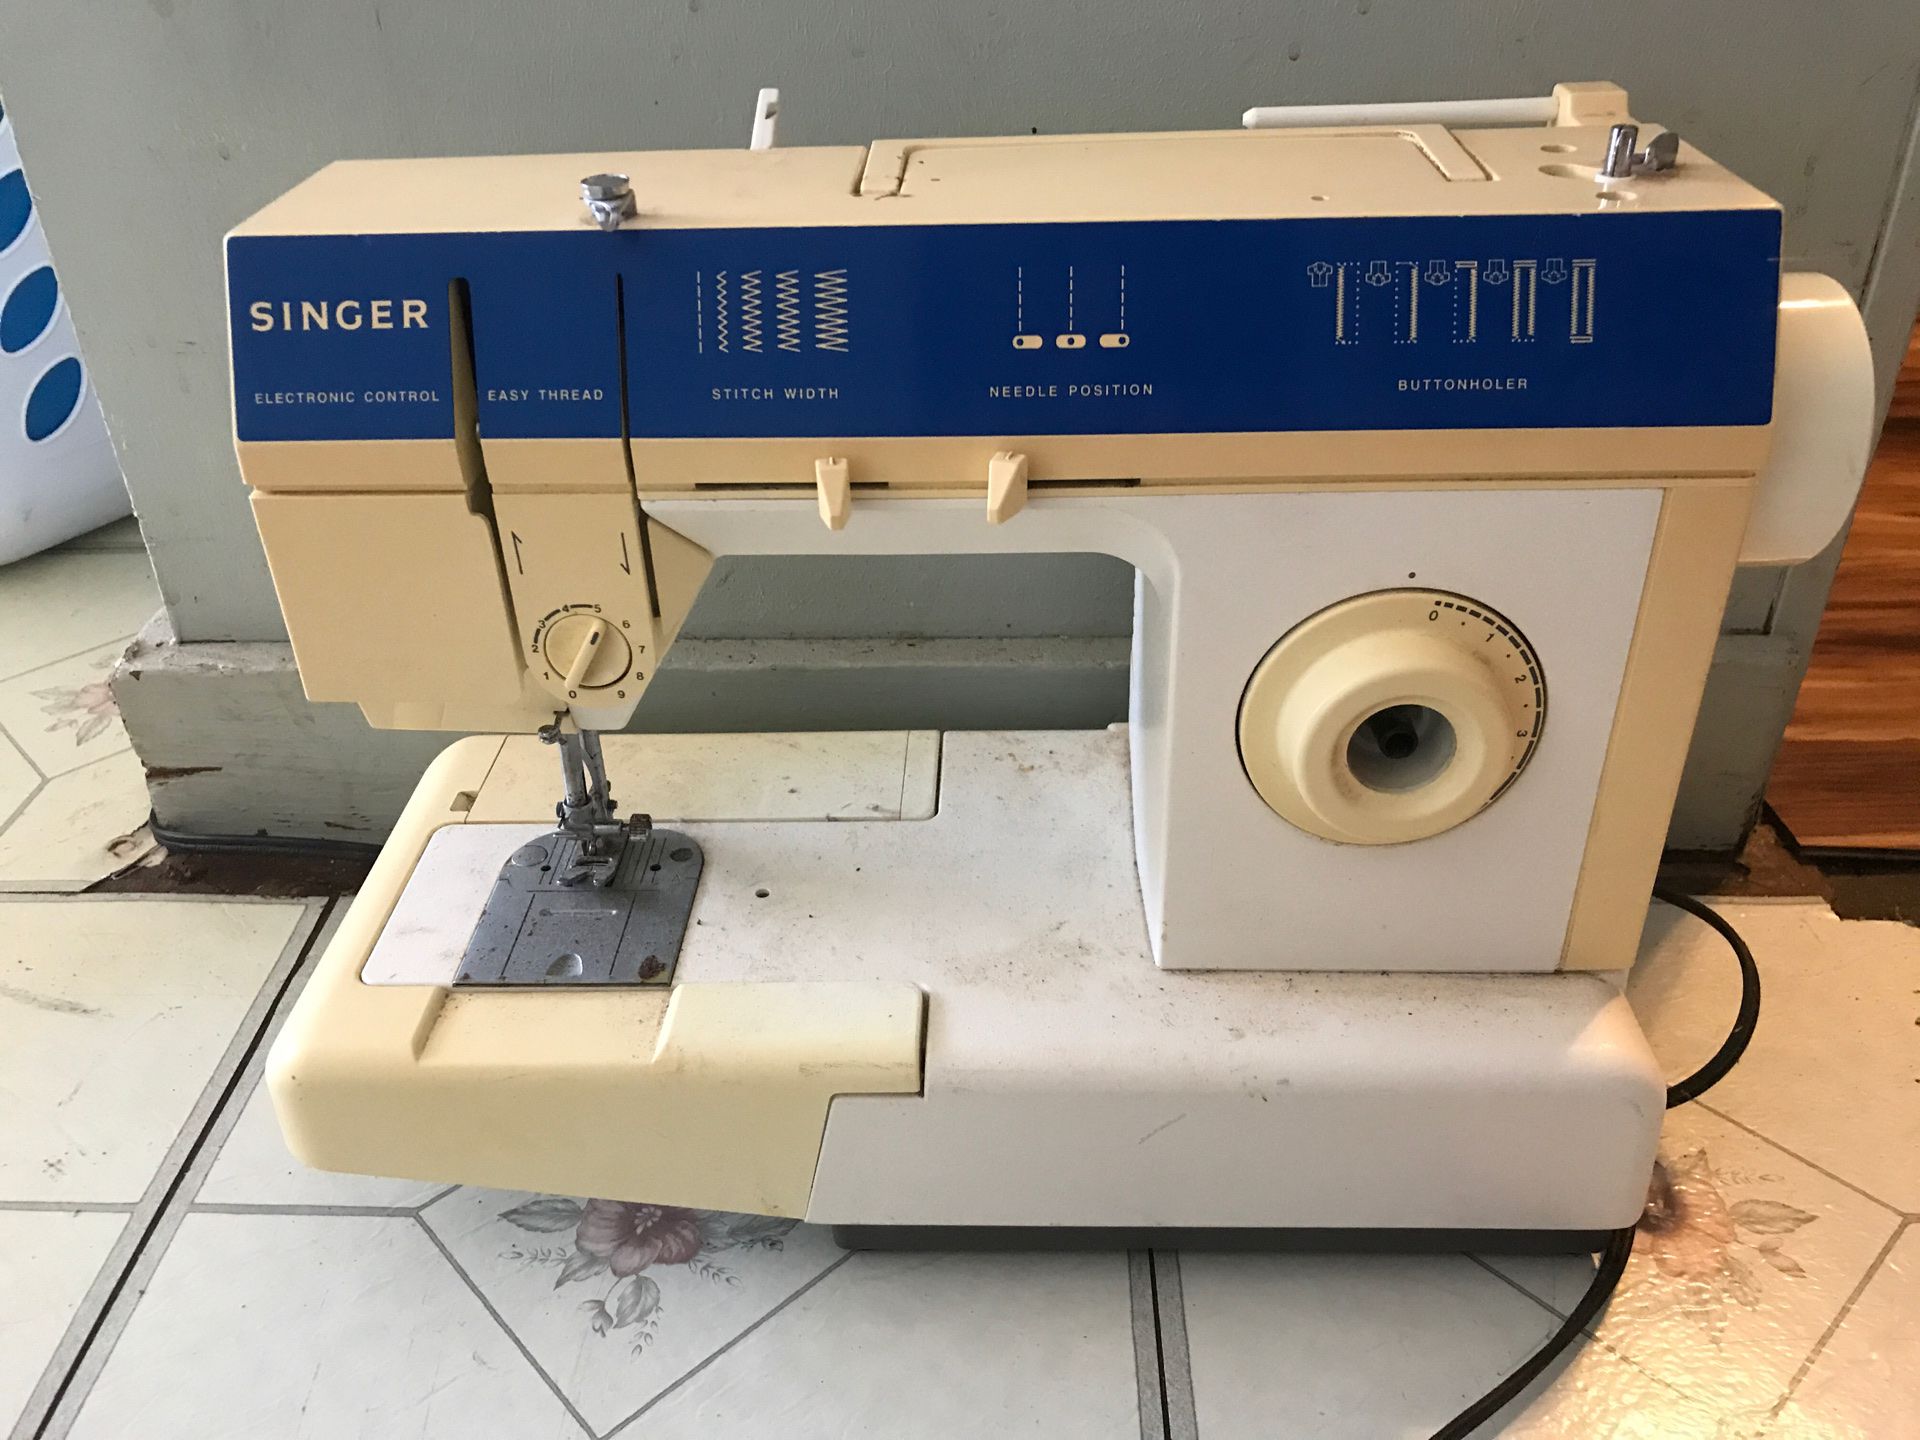 Singer foot paddle sewing machine